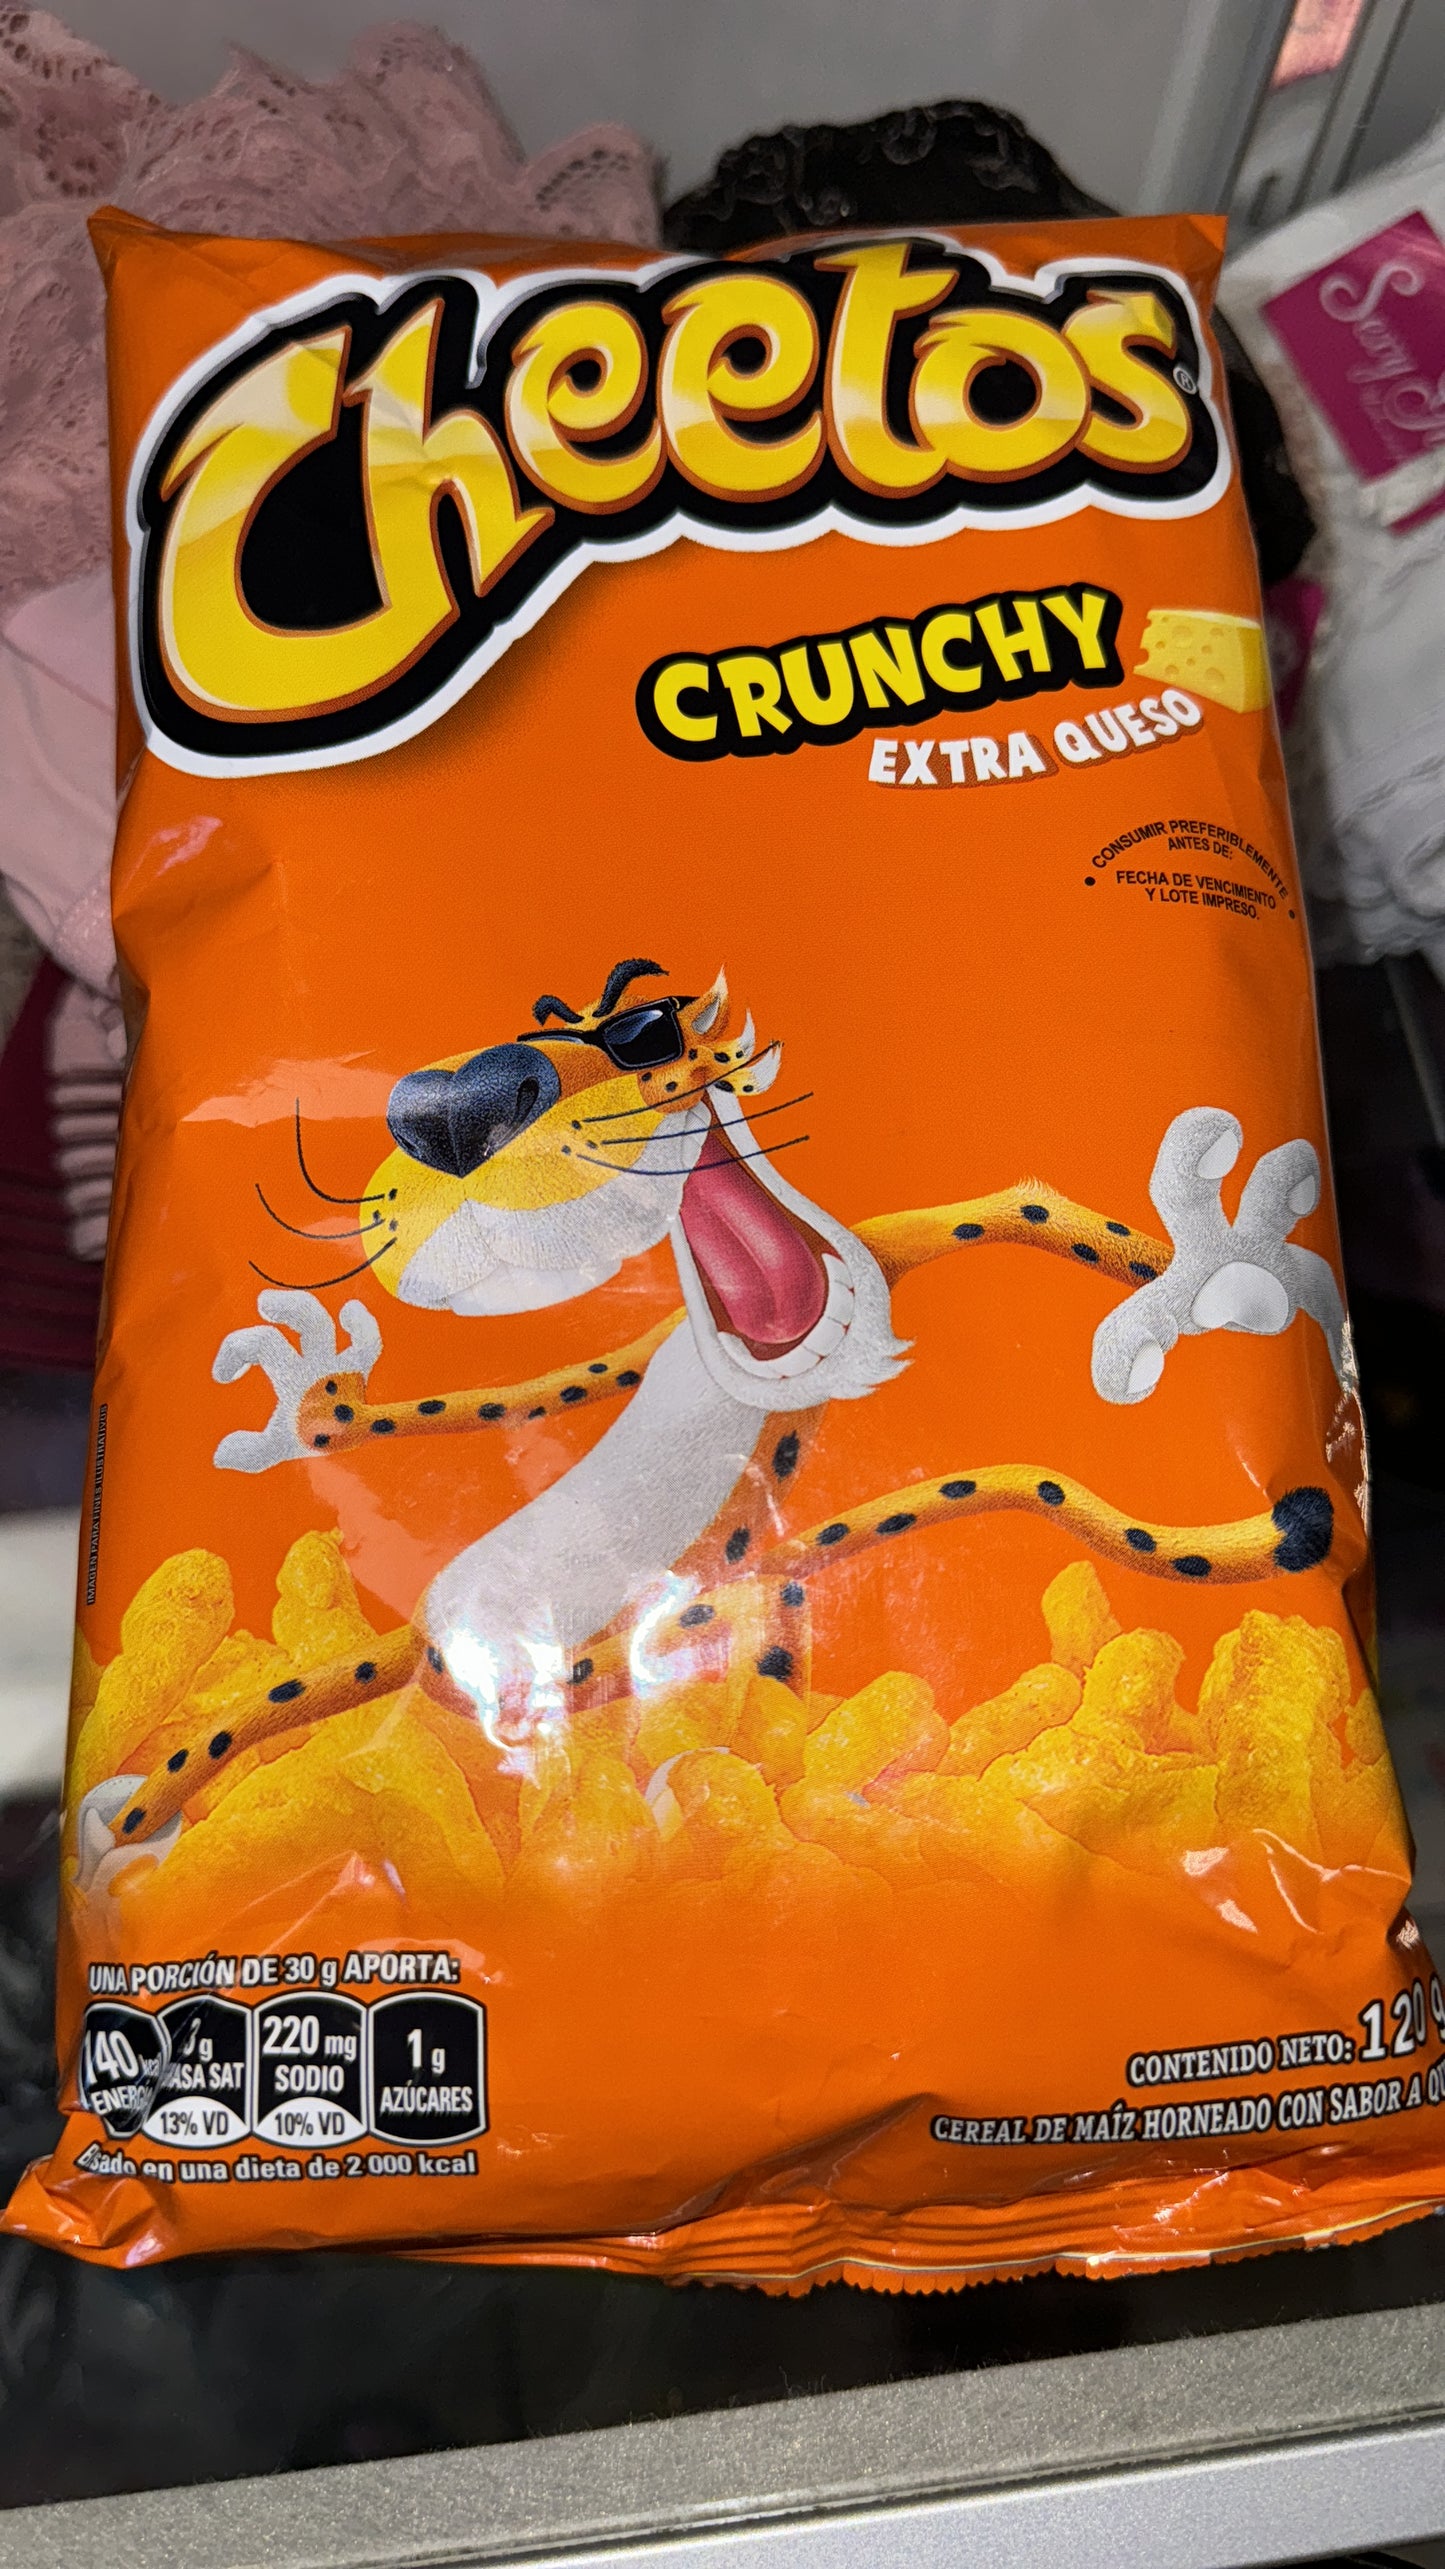 Chetos crunchy